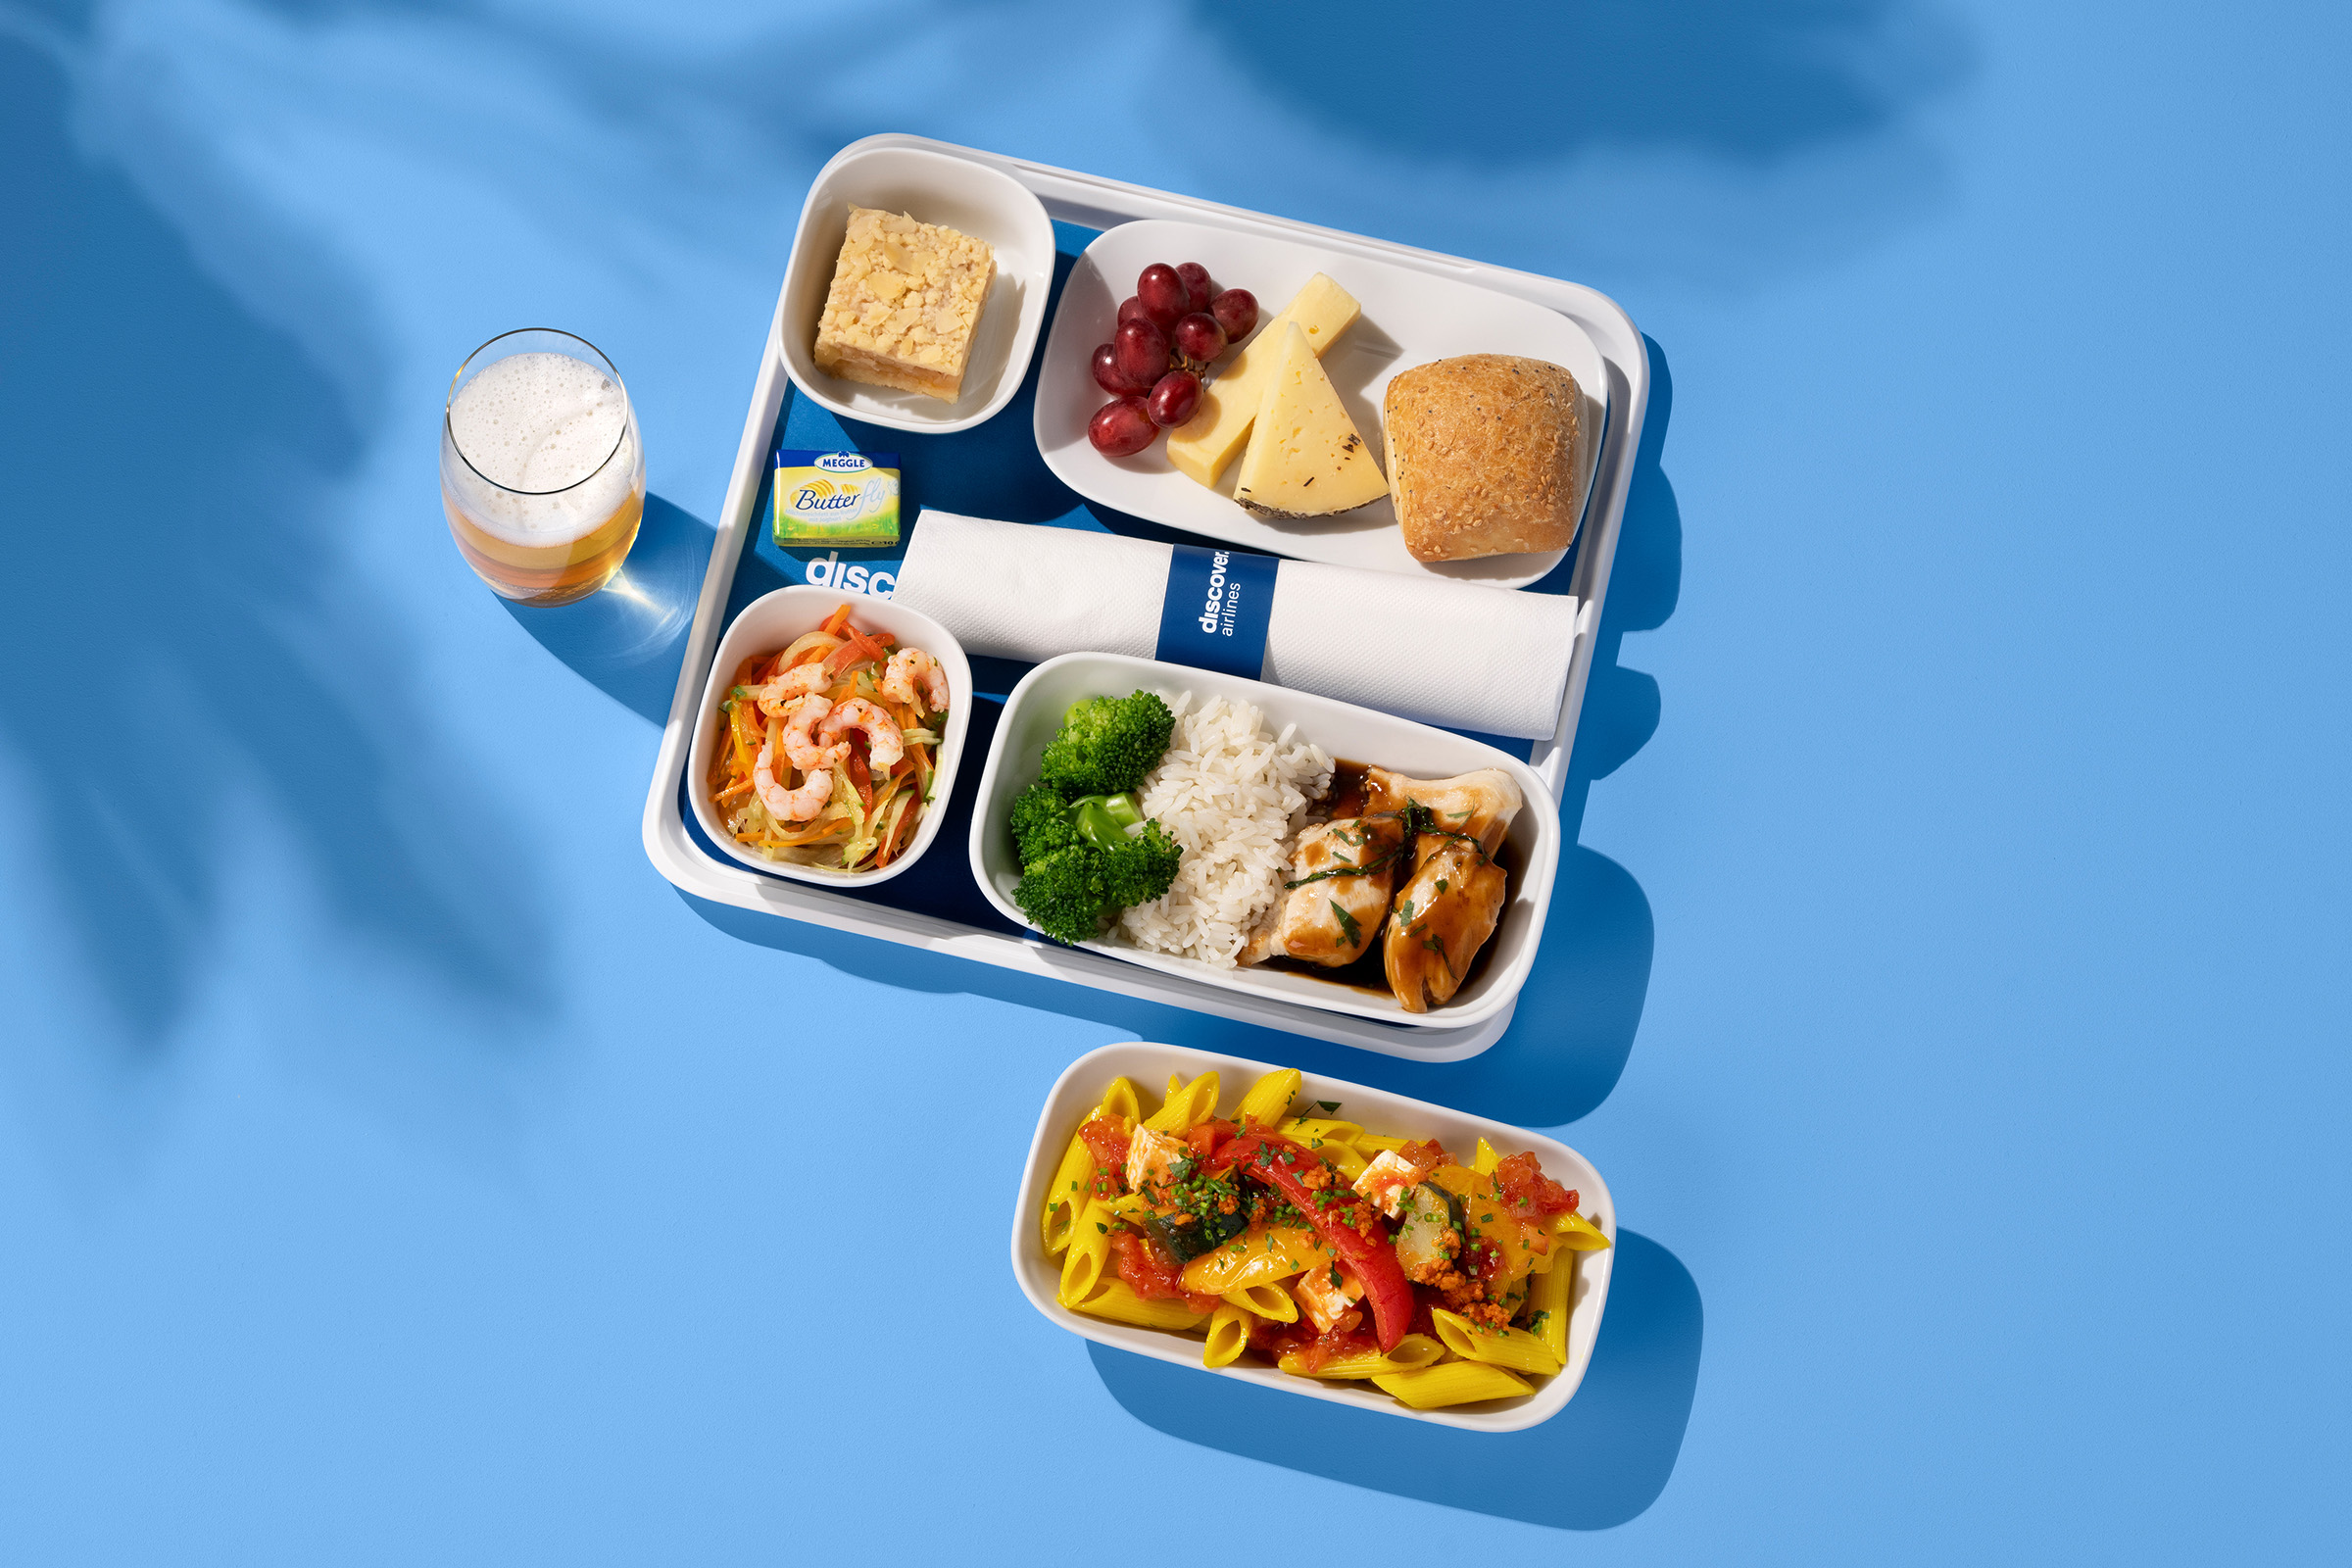 Premium Economy Class meal on long-haul flights